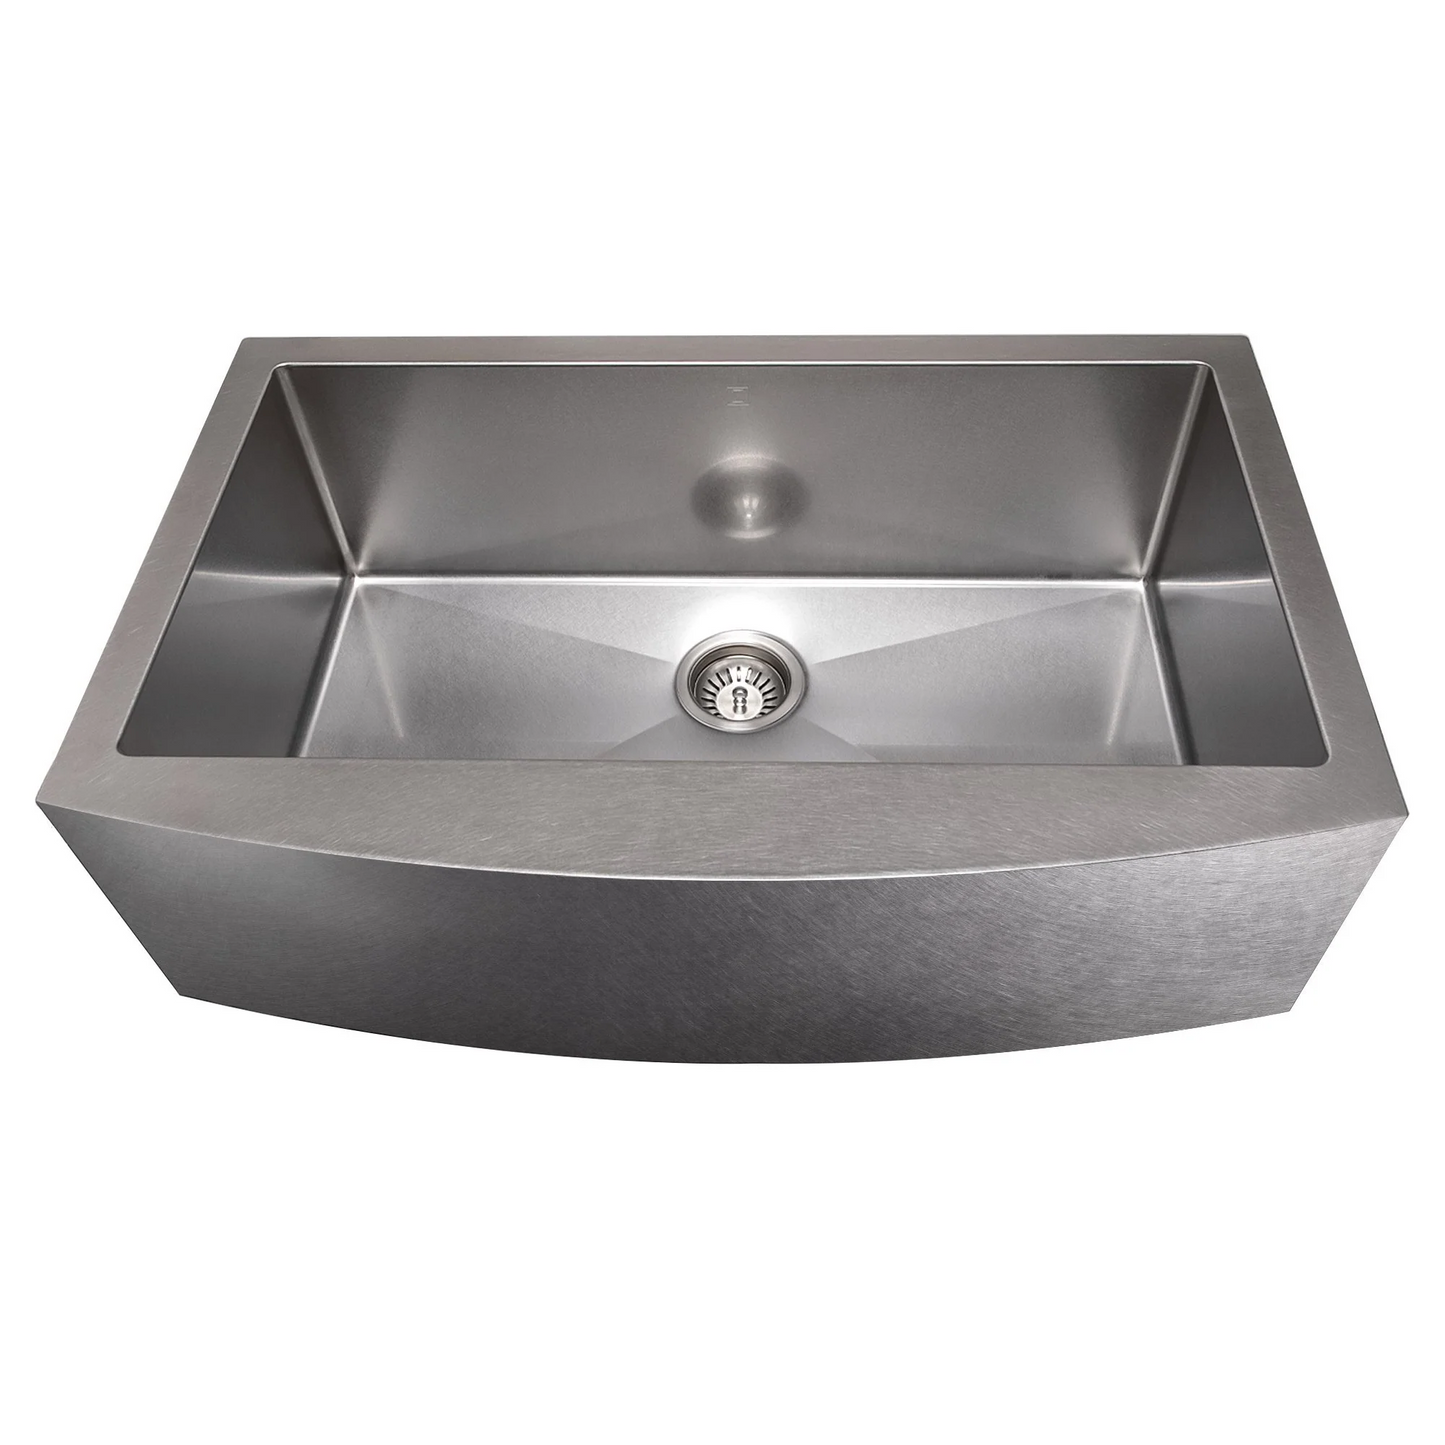 ZLINE Vail Farmhouse 33" Undermount Single Bowl Sink in Stainless Steel